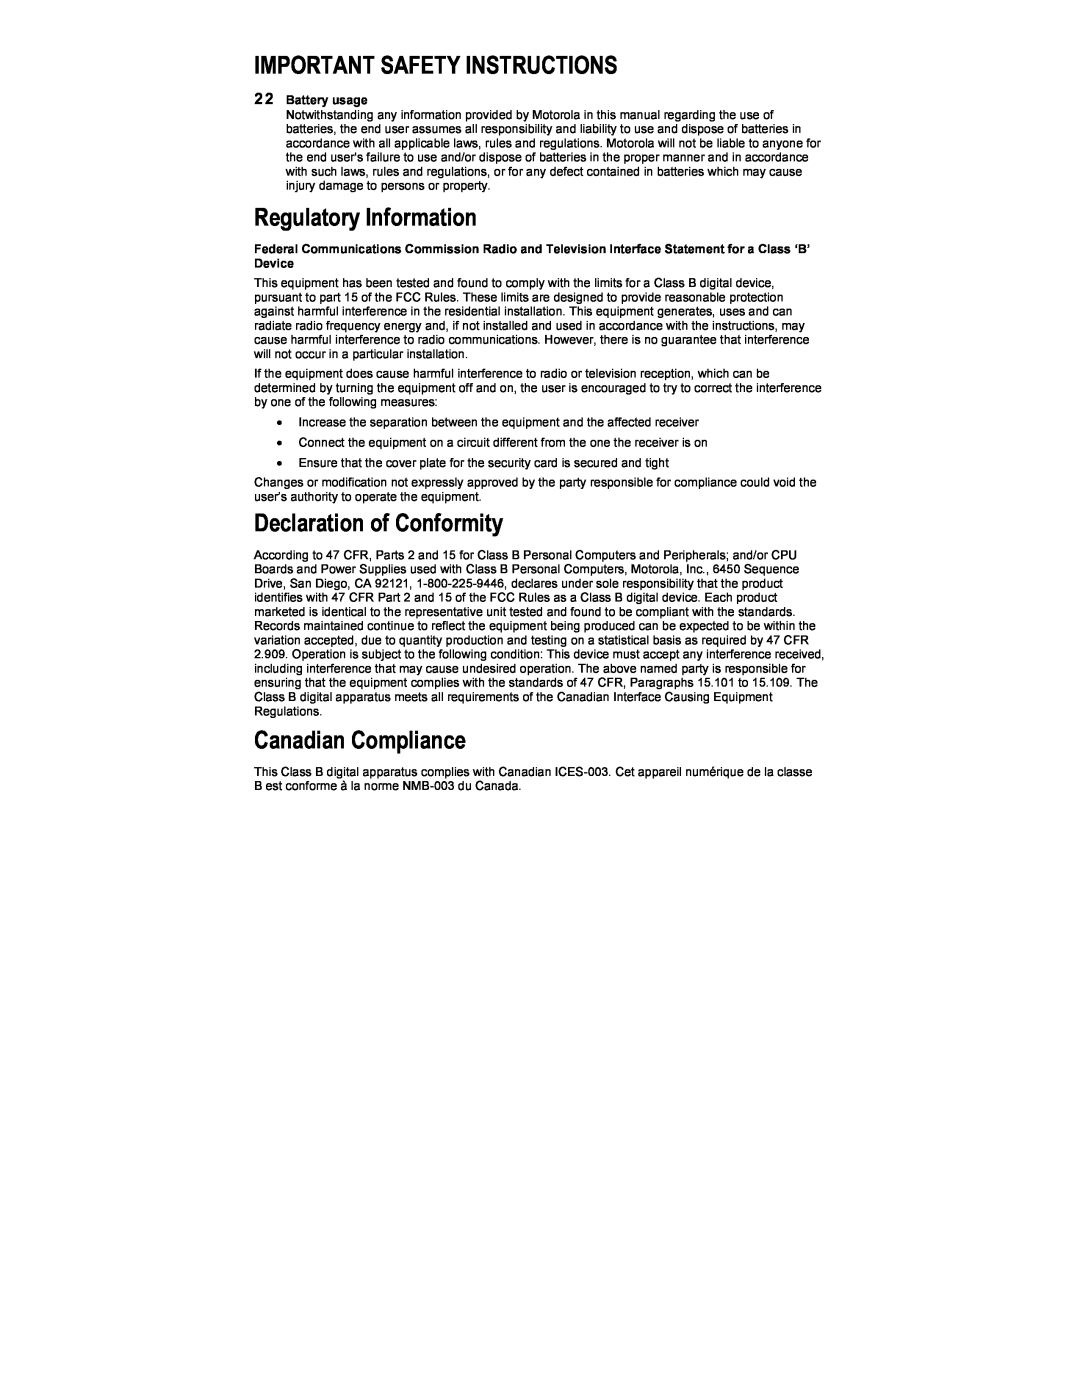 Motorola HDT100 Regulatory Information, Declaration of Conformity, Canadian Compliance, Important Safety Instructions 